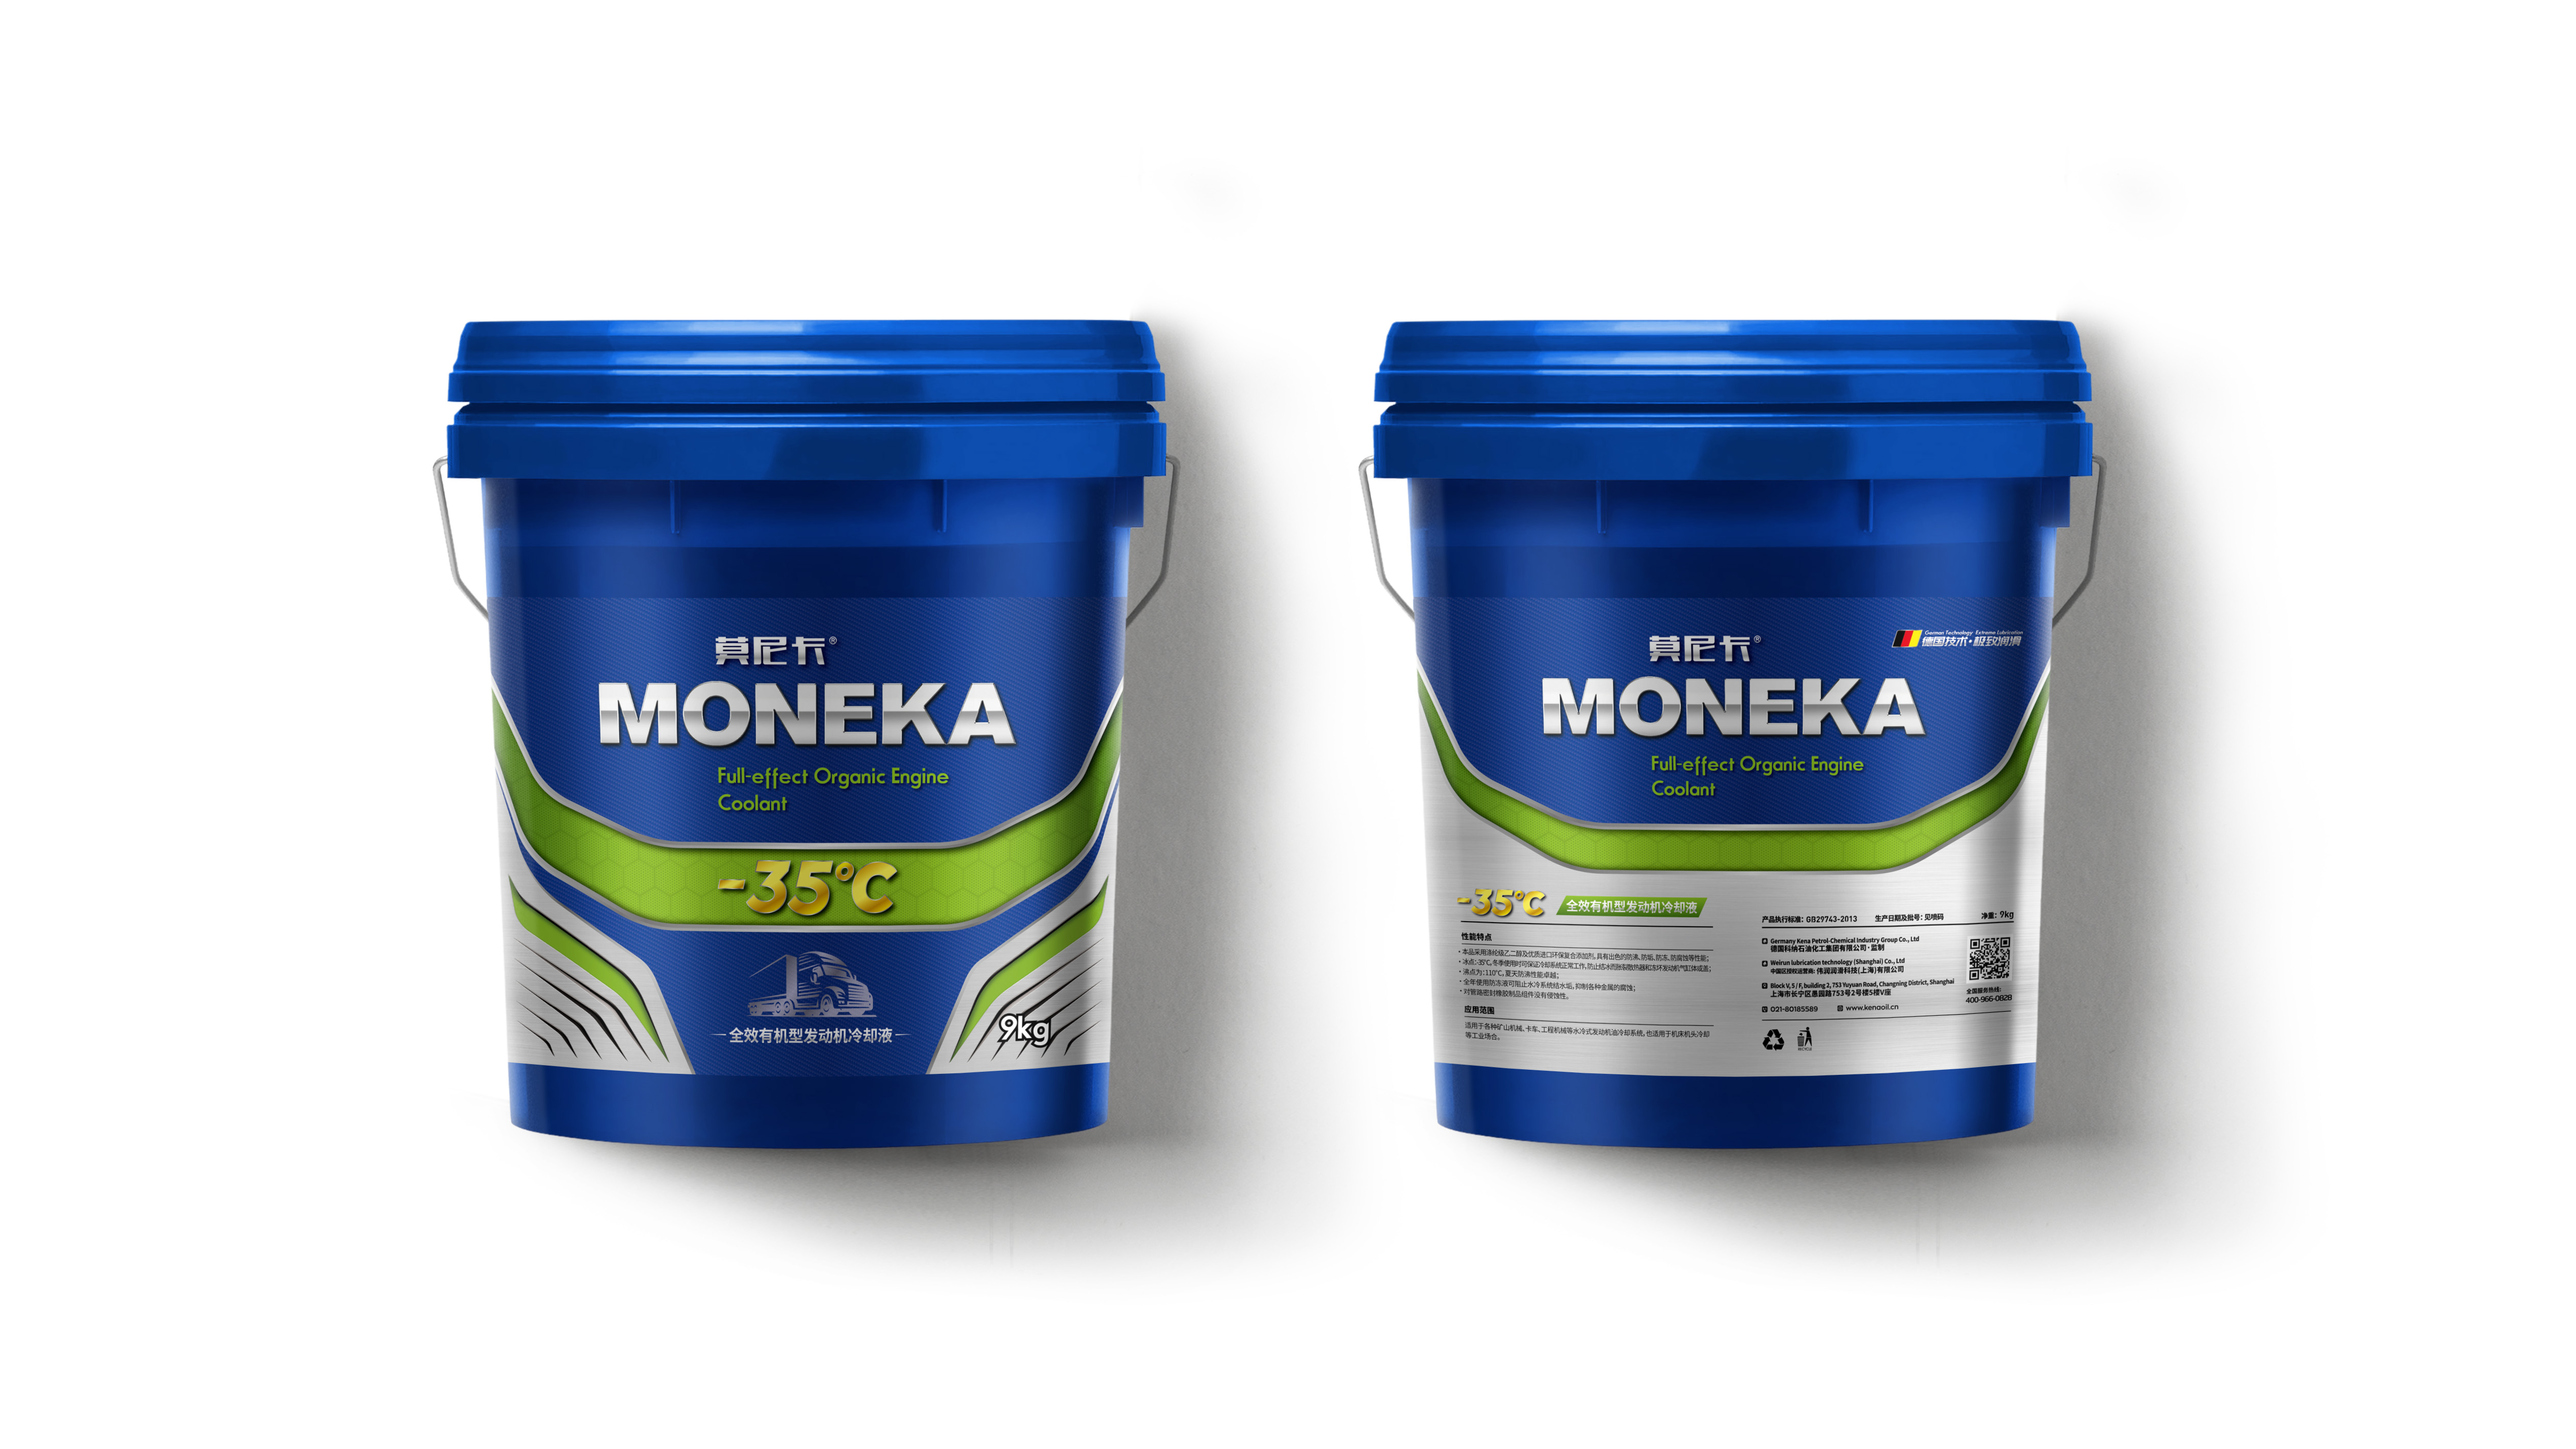 MONEKA 莫尼卡 全效有机型发动机冷却液